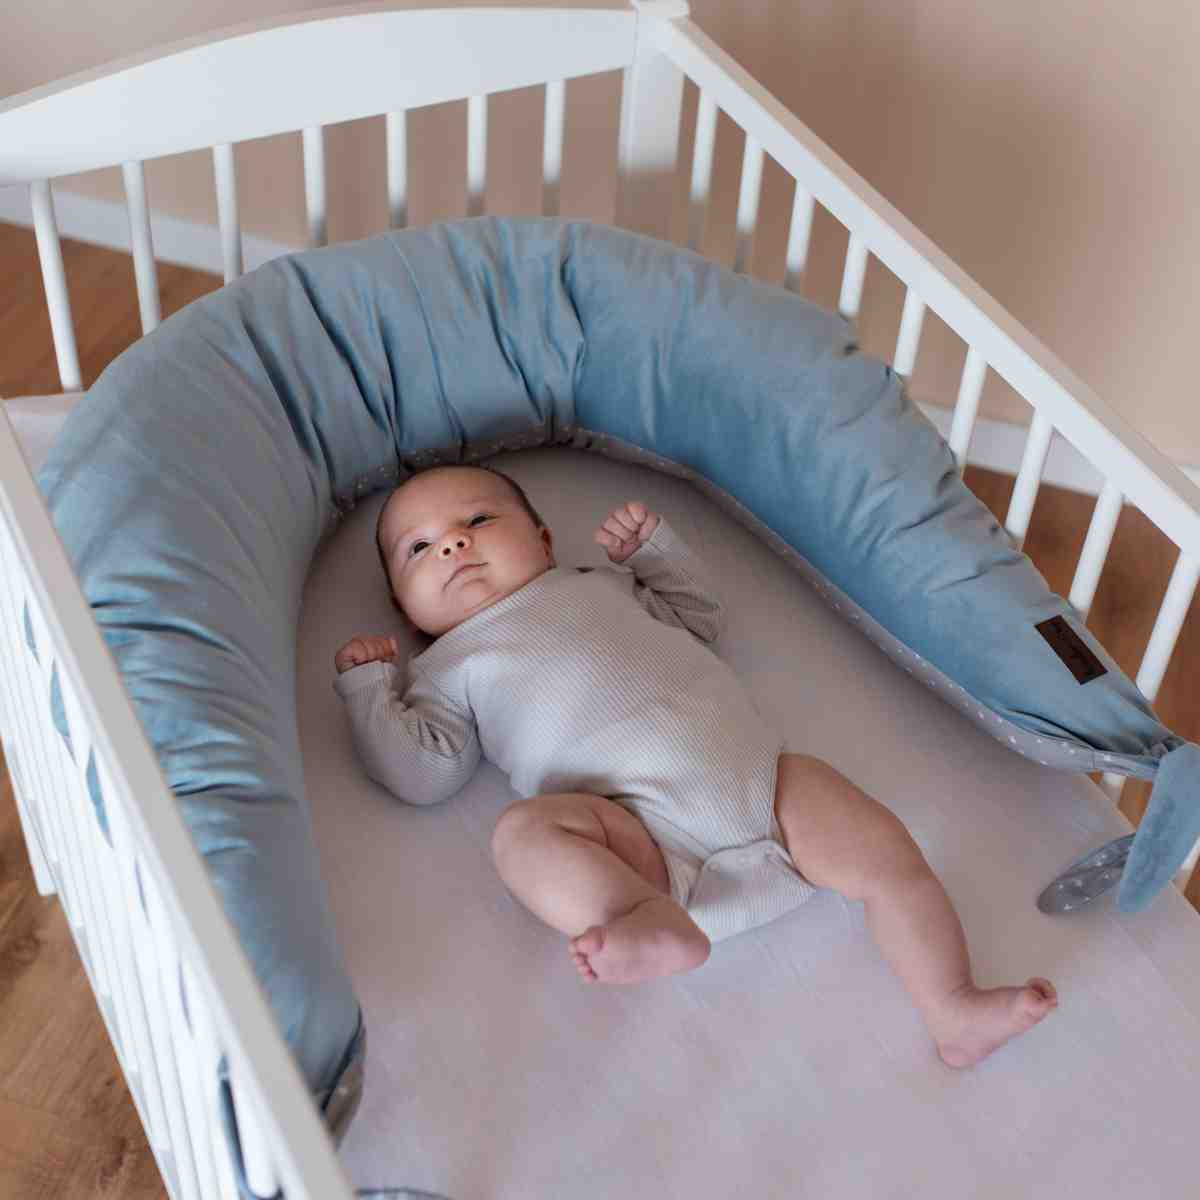 Coussin allaitement | Baby-Confort